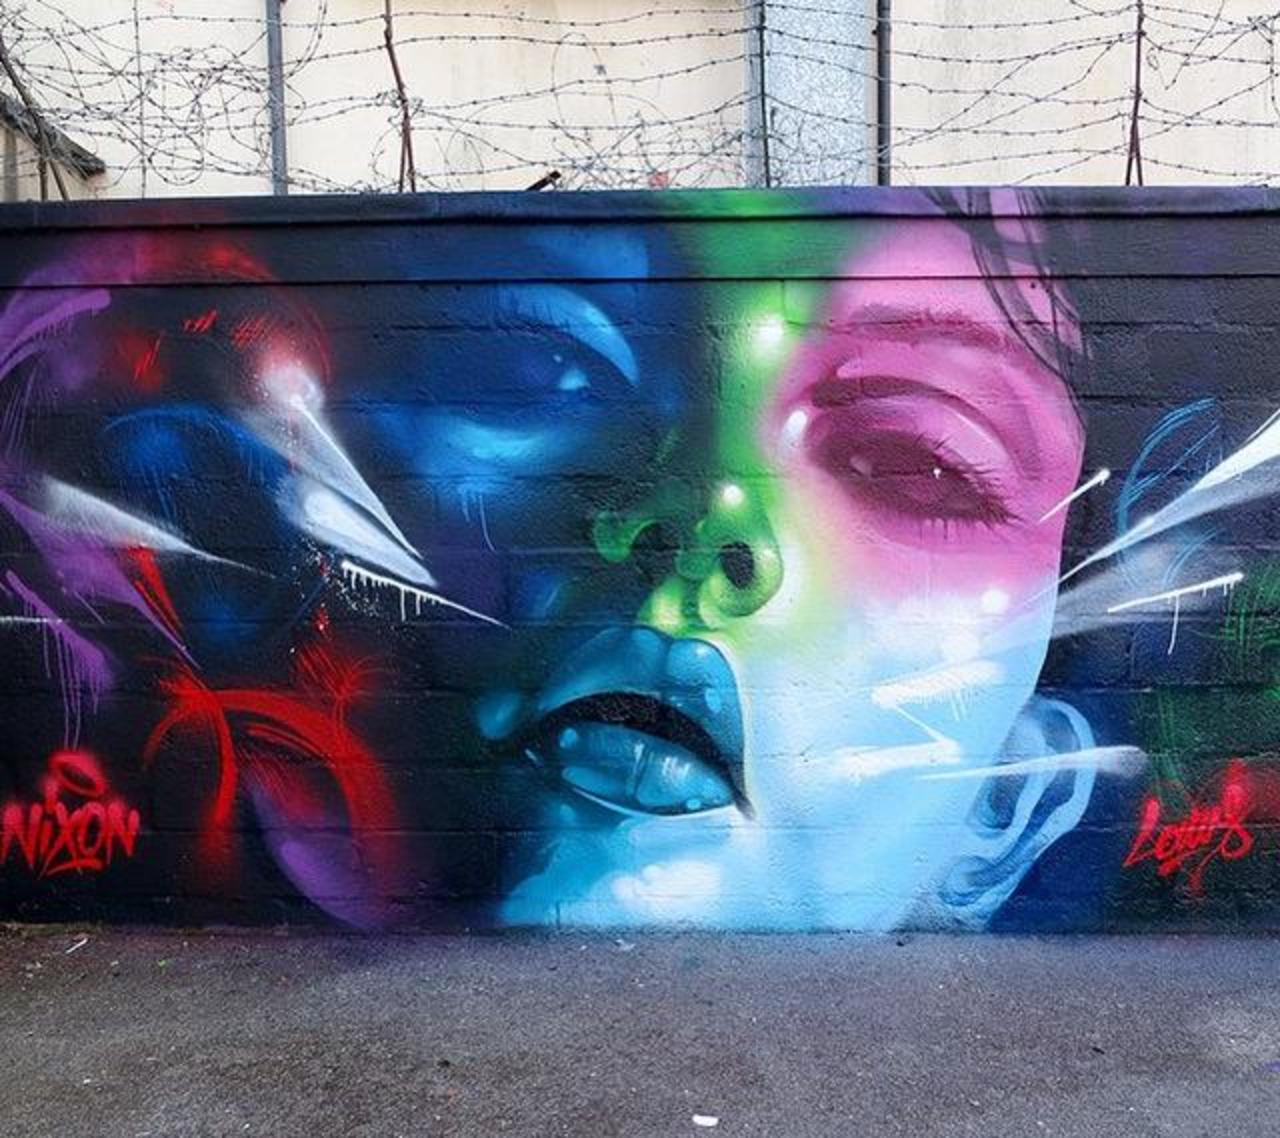 New Street Art by rmerism in Cardiff 

#art #arte #graffiti #streetart http://t.co/mVuHJi9cty